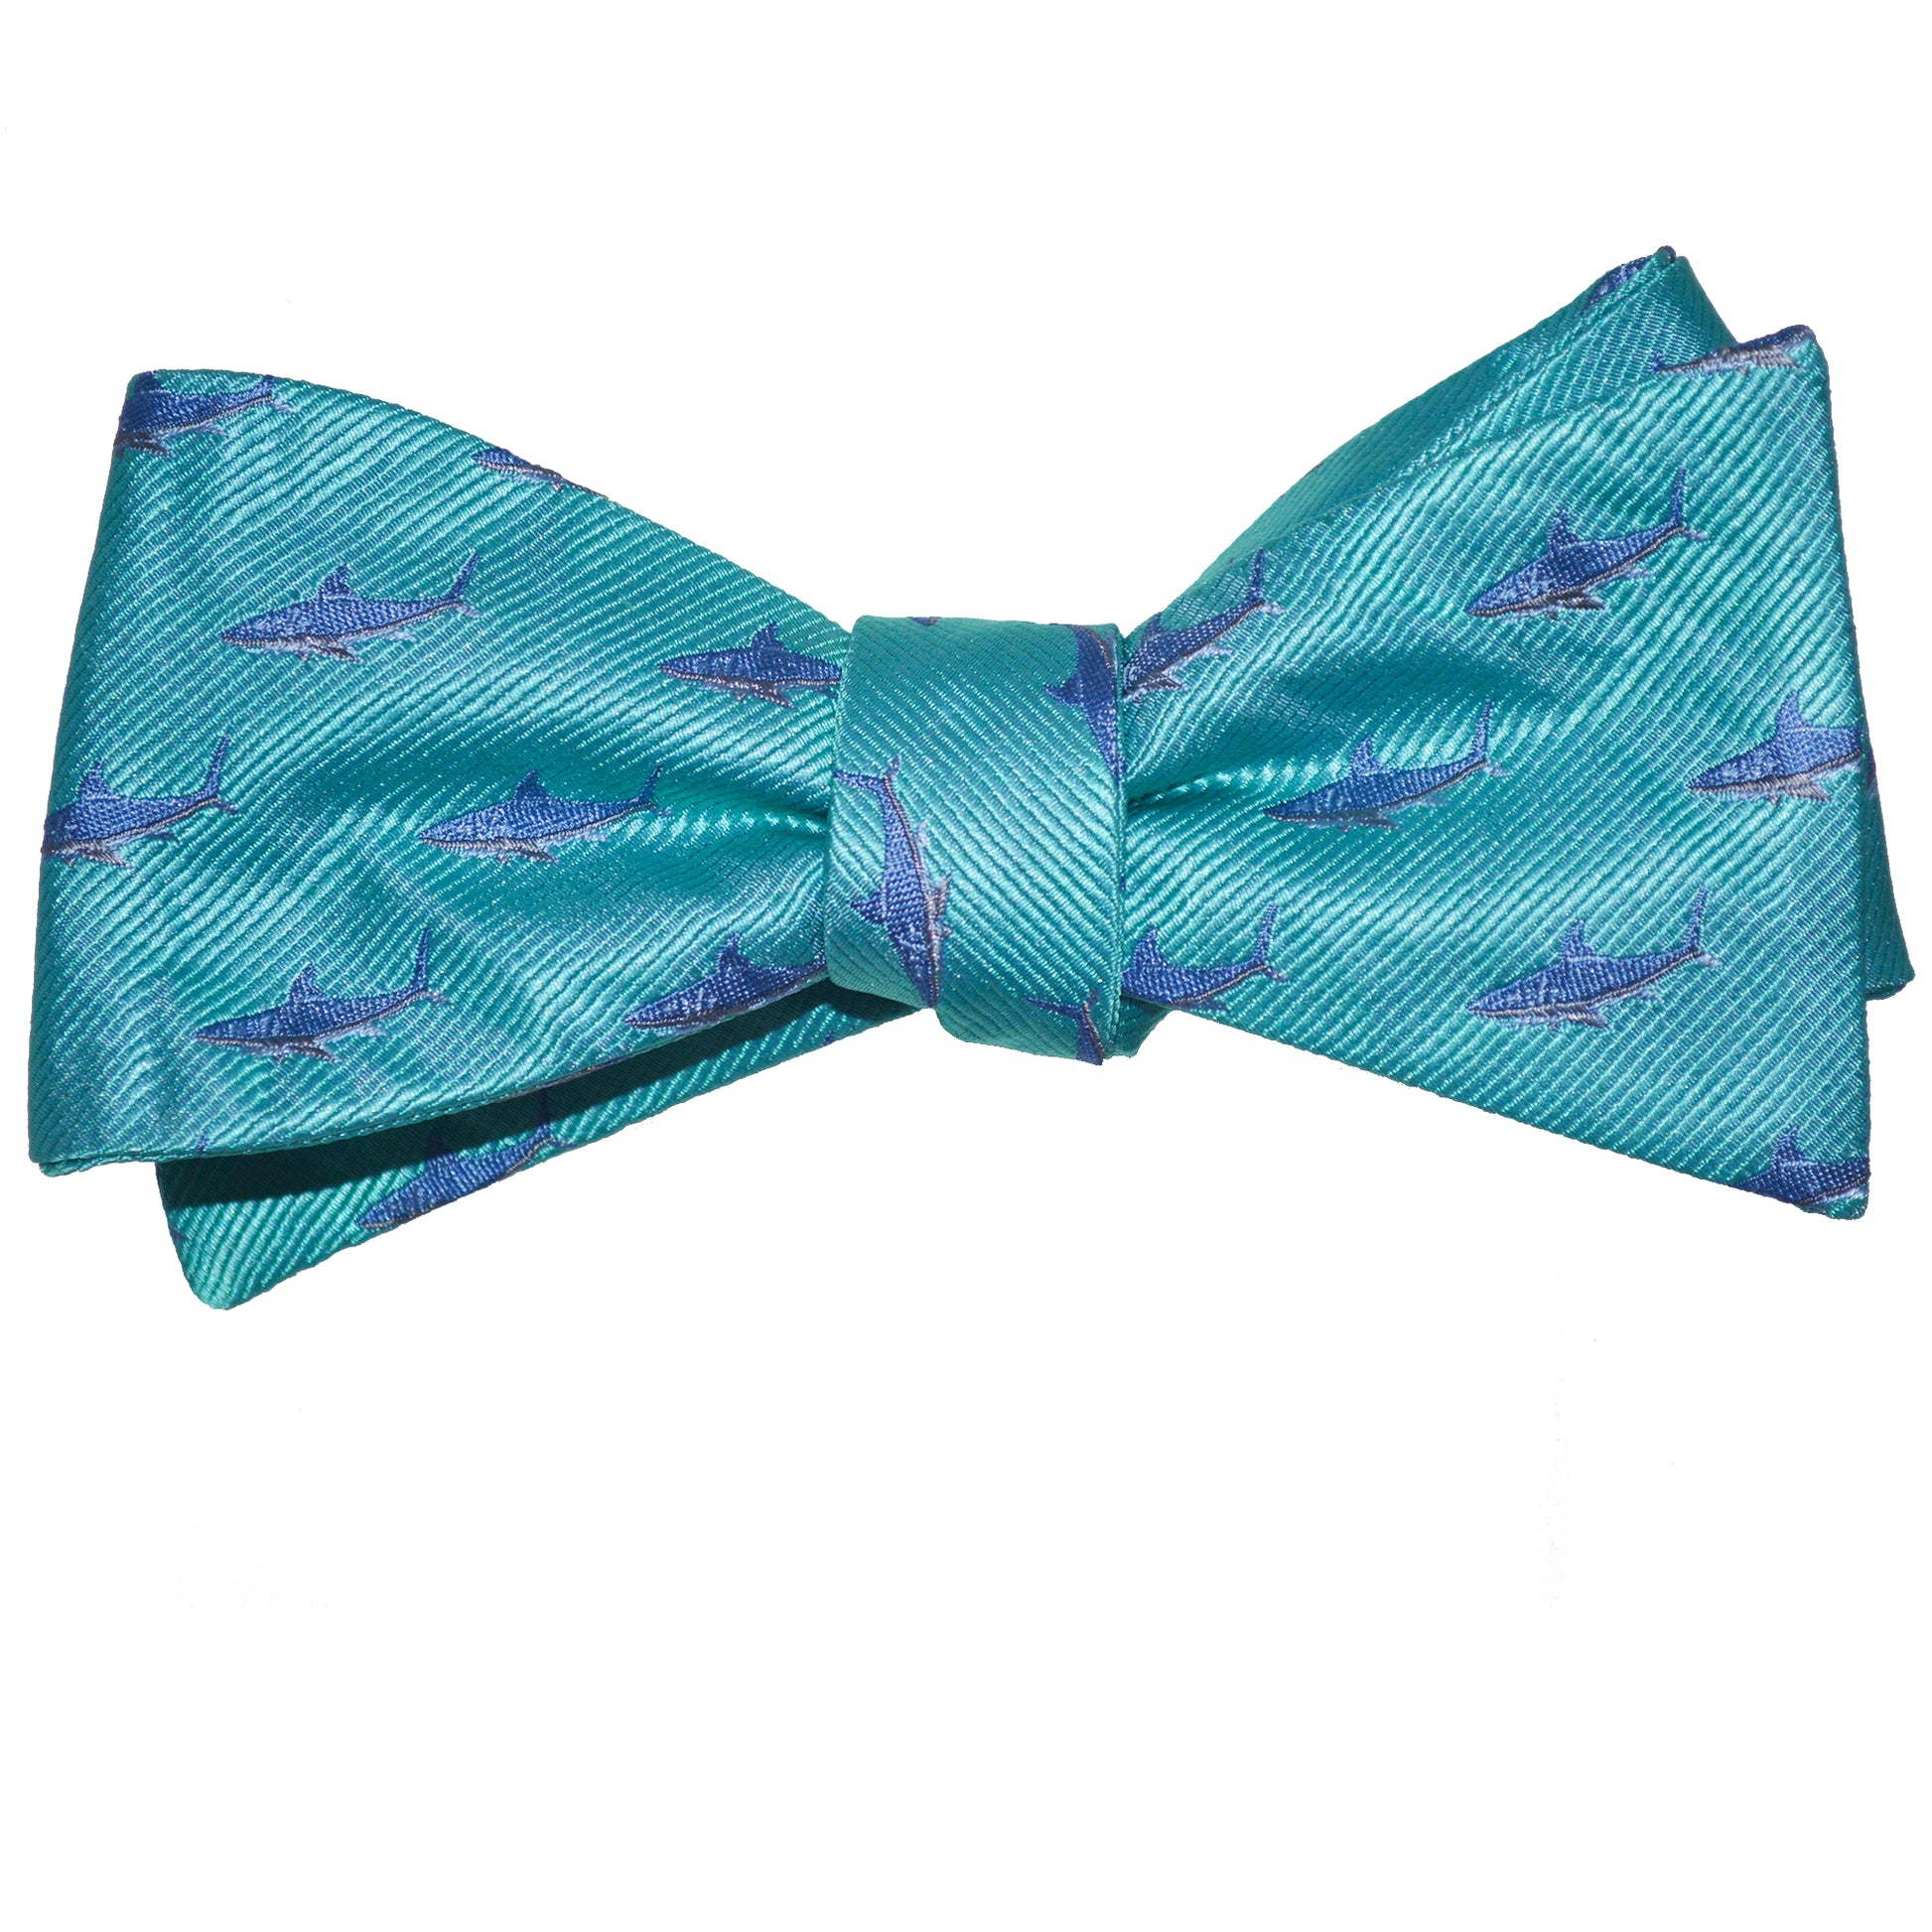 Shark Bow Tie - Blue on Aqua, Woven Silk - SummerTies